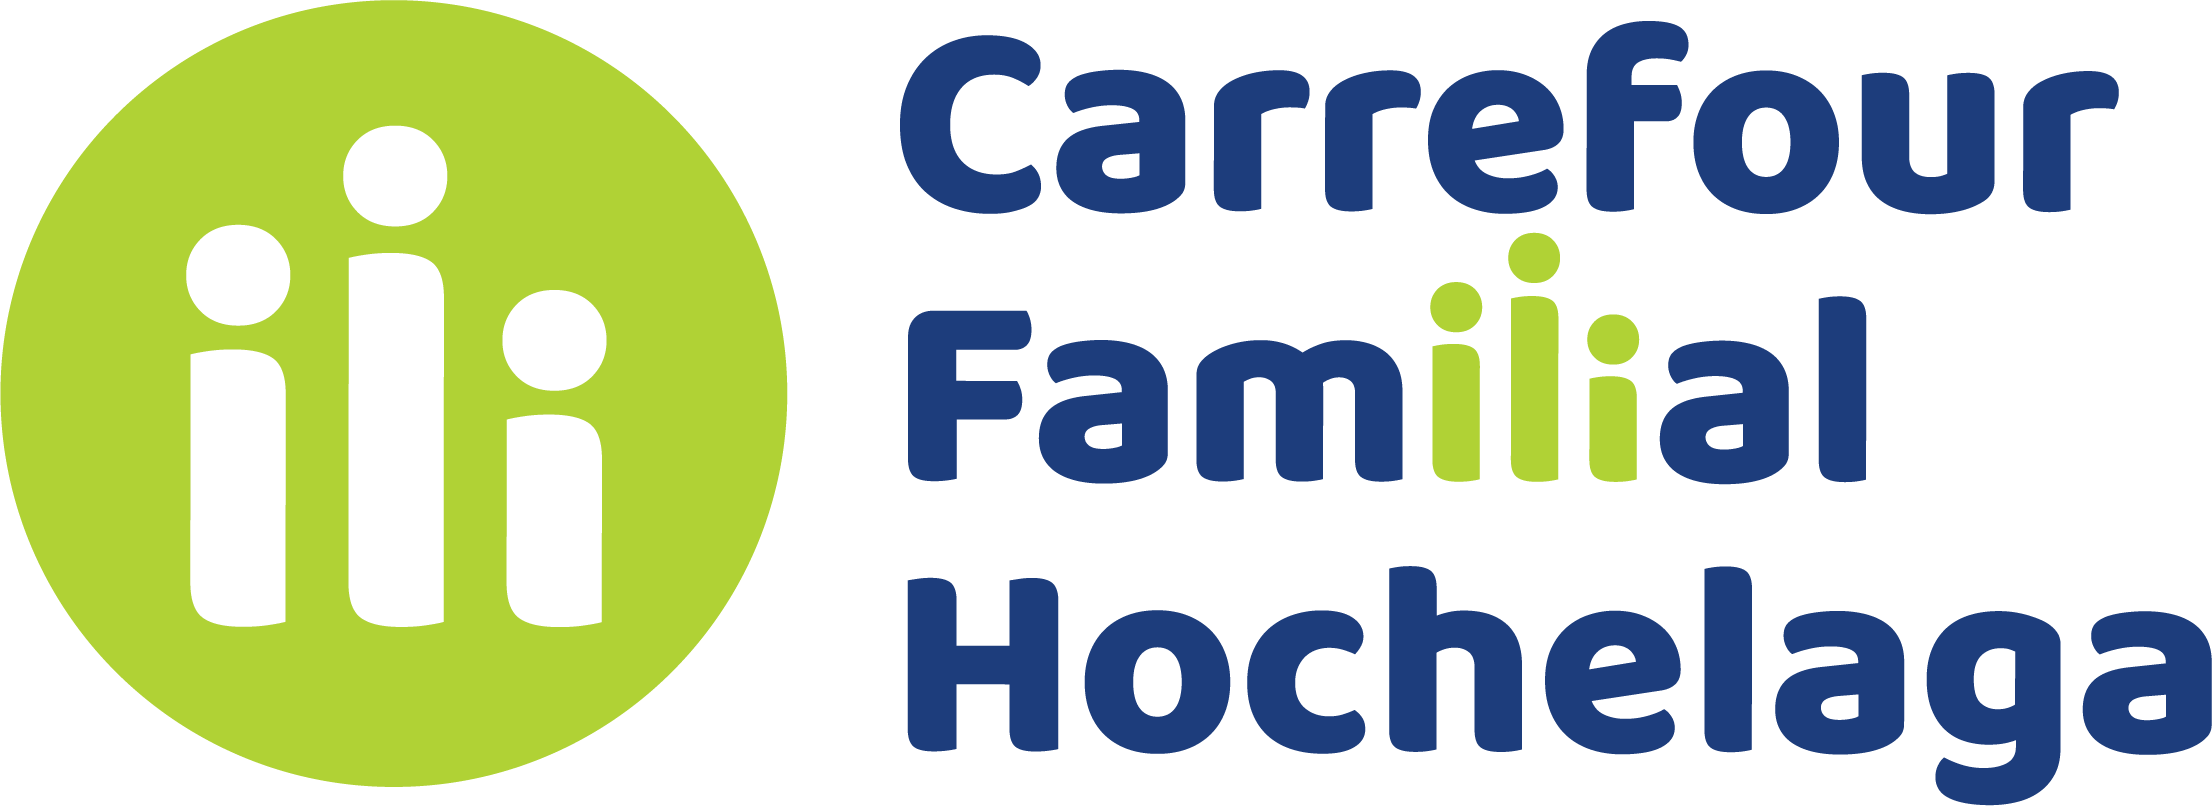 Carrefour Familial Hochelaga